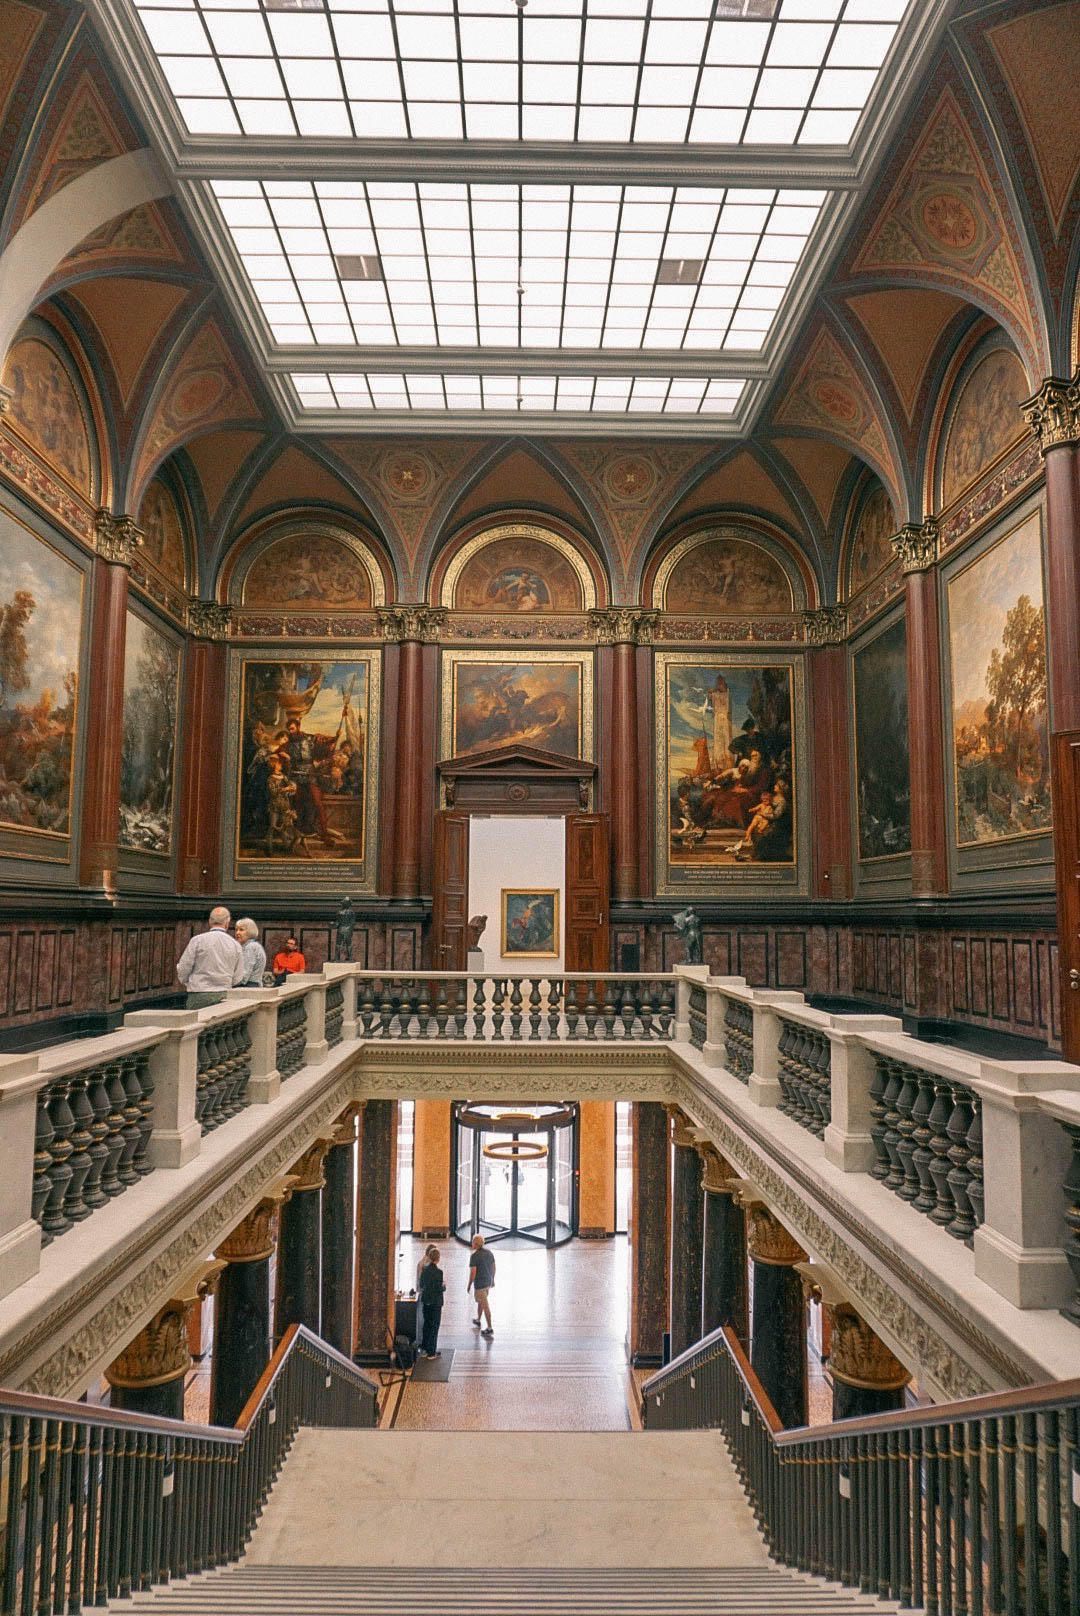 inside staircase of Hamburg's Kunsthalle art museum